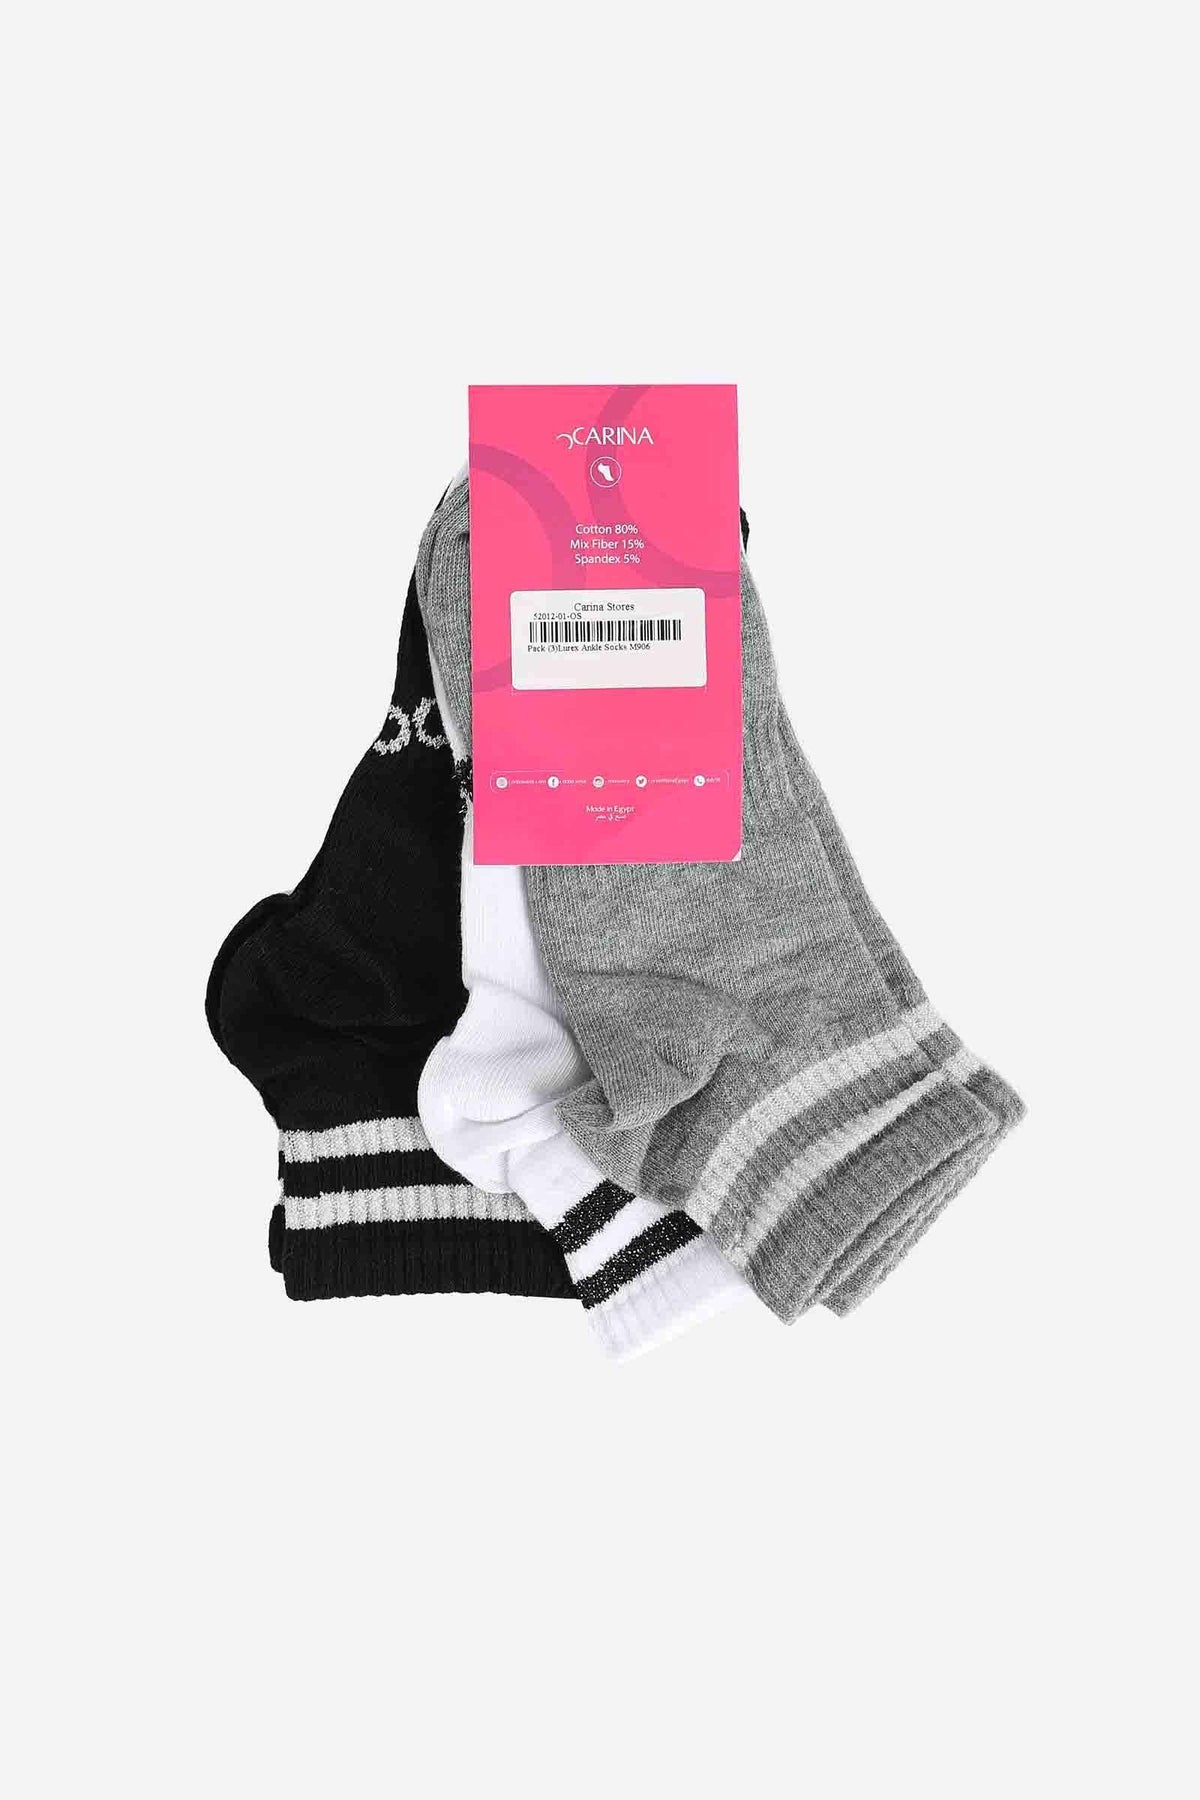 Lurex Ankle Socks - 3 Pairs - Carina - كارينا